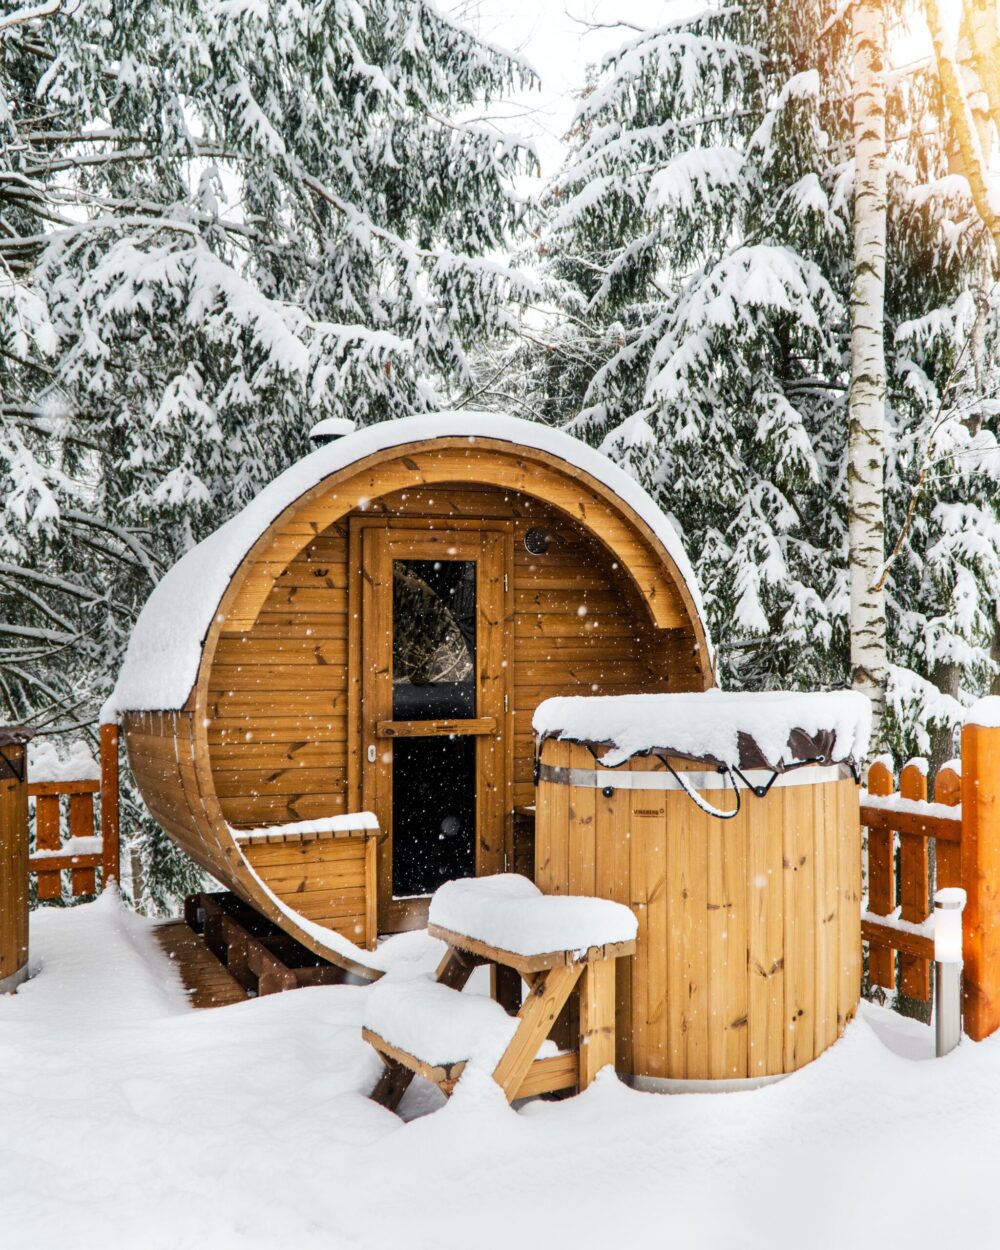 Neptune saunas - outdoor barrel sauna in snow - sauna maintenance guide article